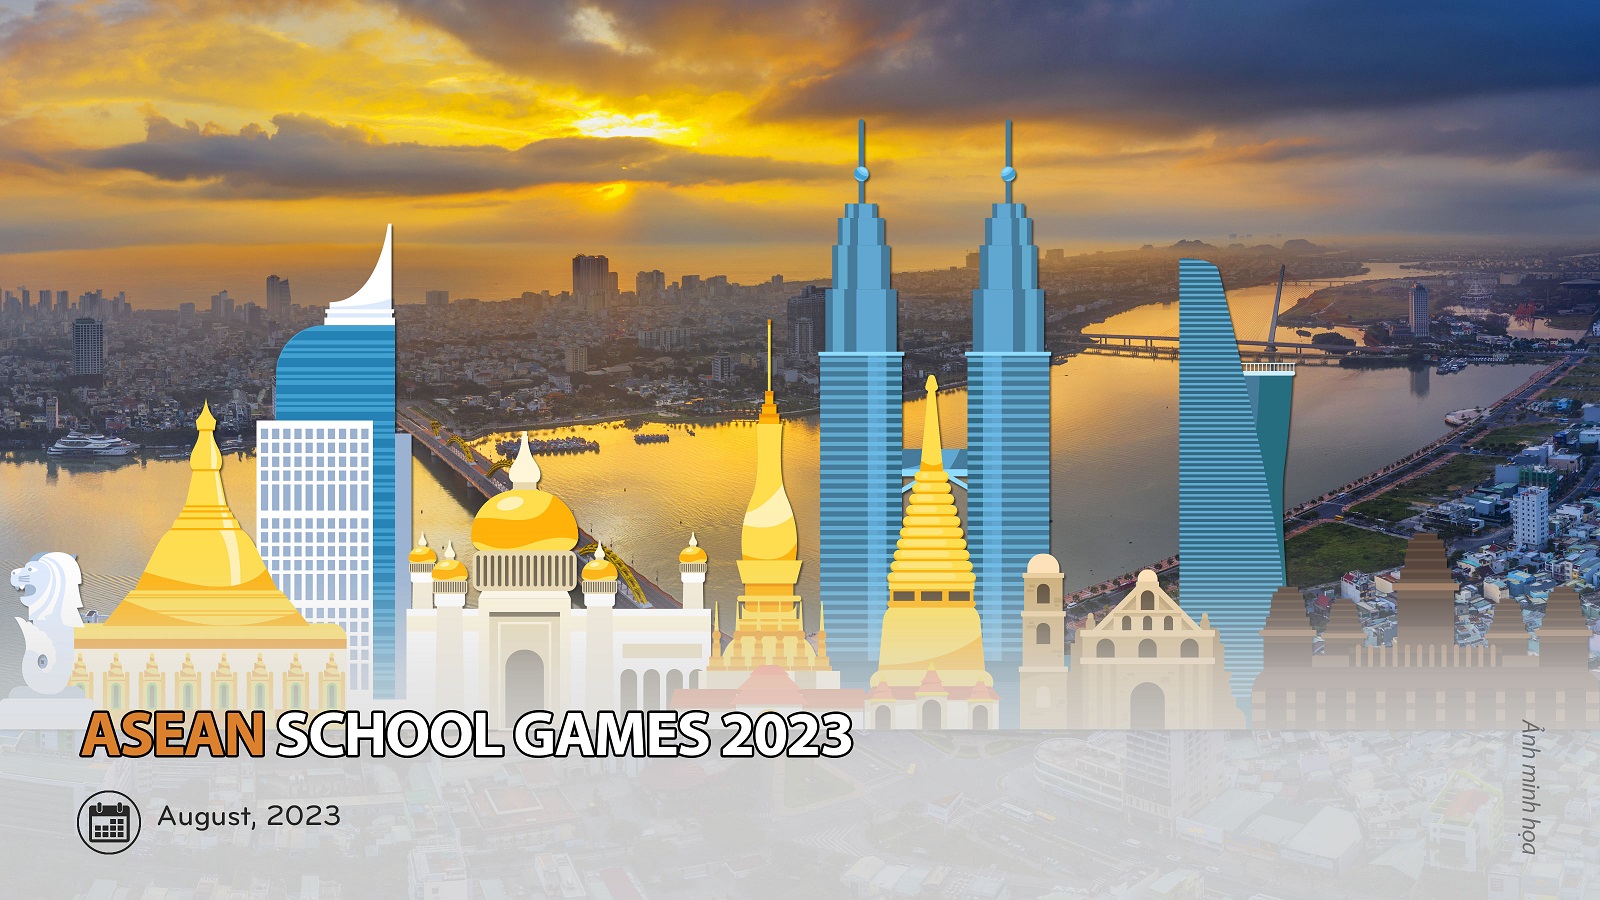 23 Asean School Games 2023